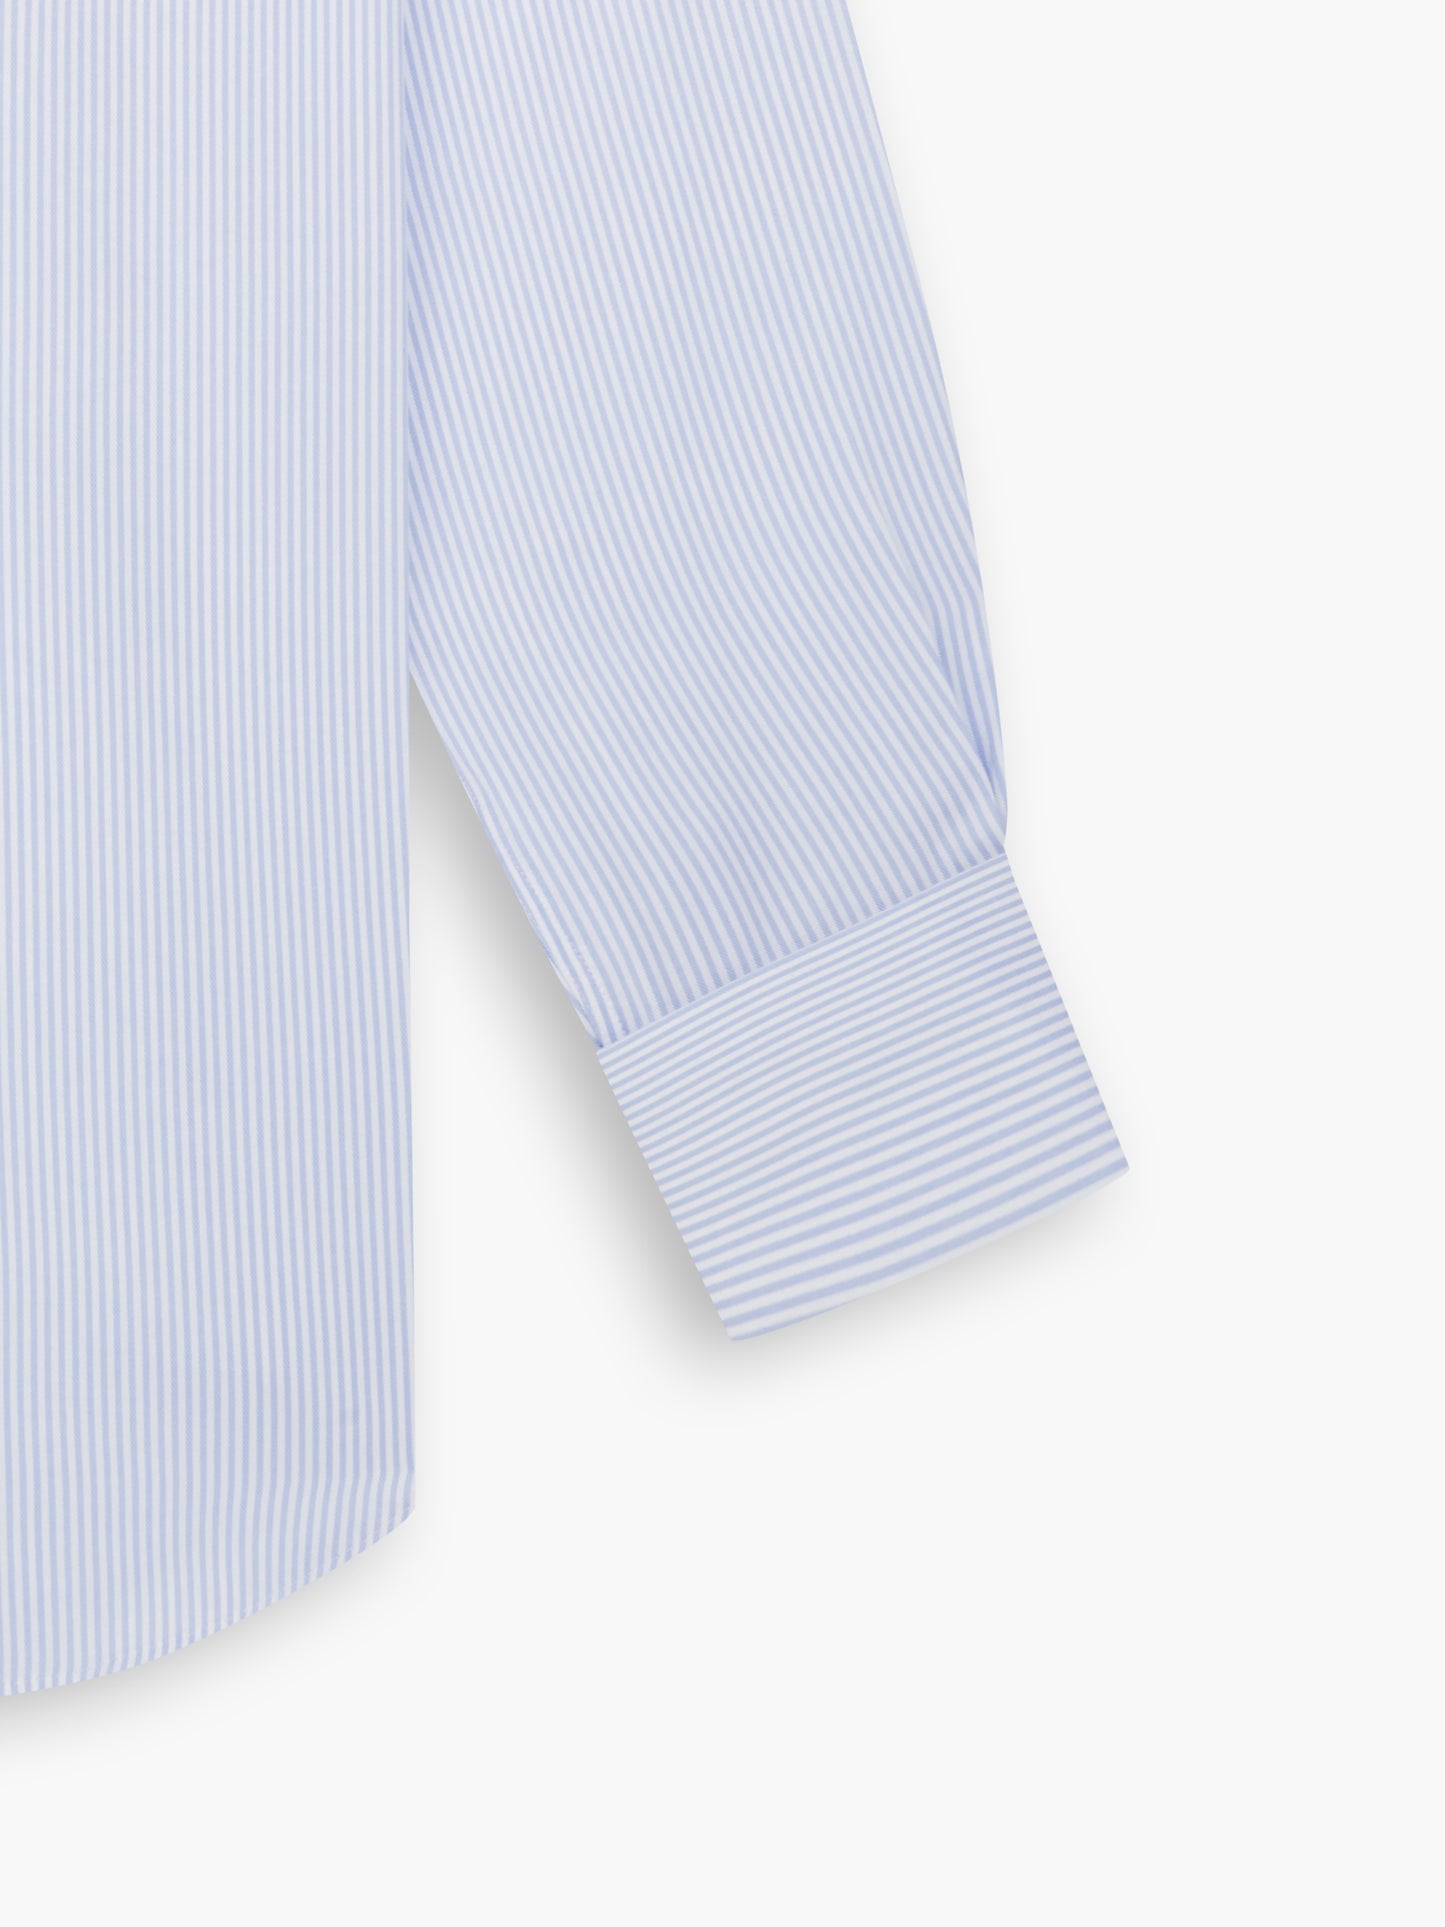 Non-Iron Light Blue Bengal Stripe Twill Slim Fit Double Cuff Cutaway Collar Shirt